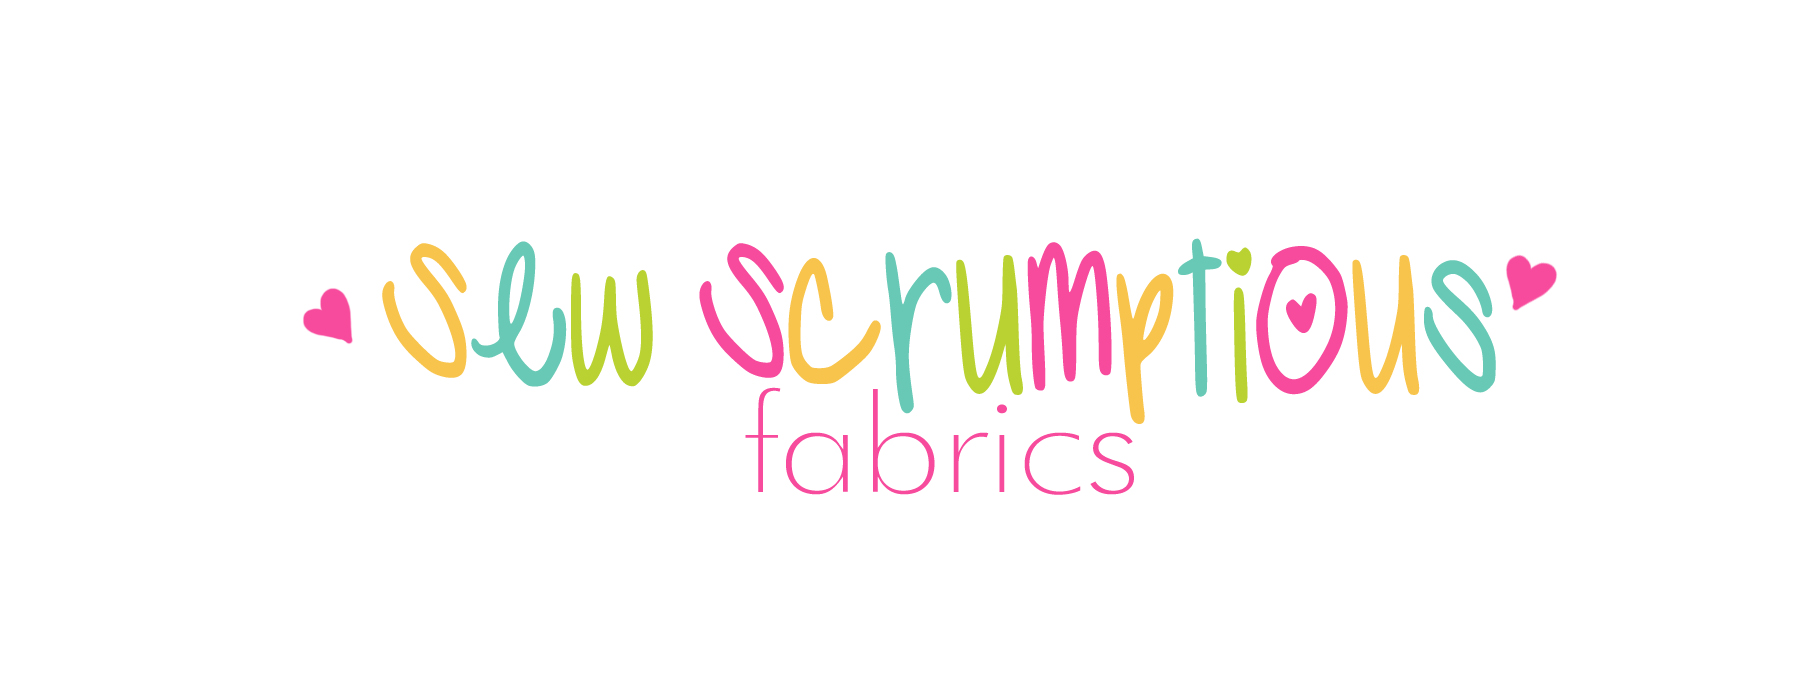 sew scrumptious fabrics